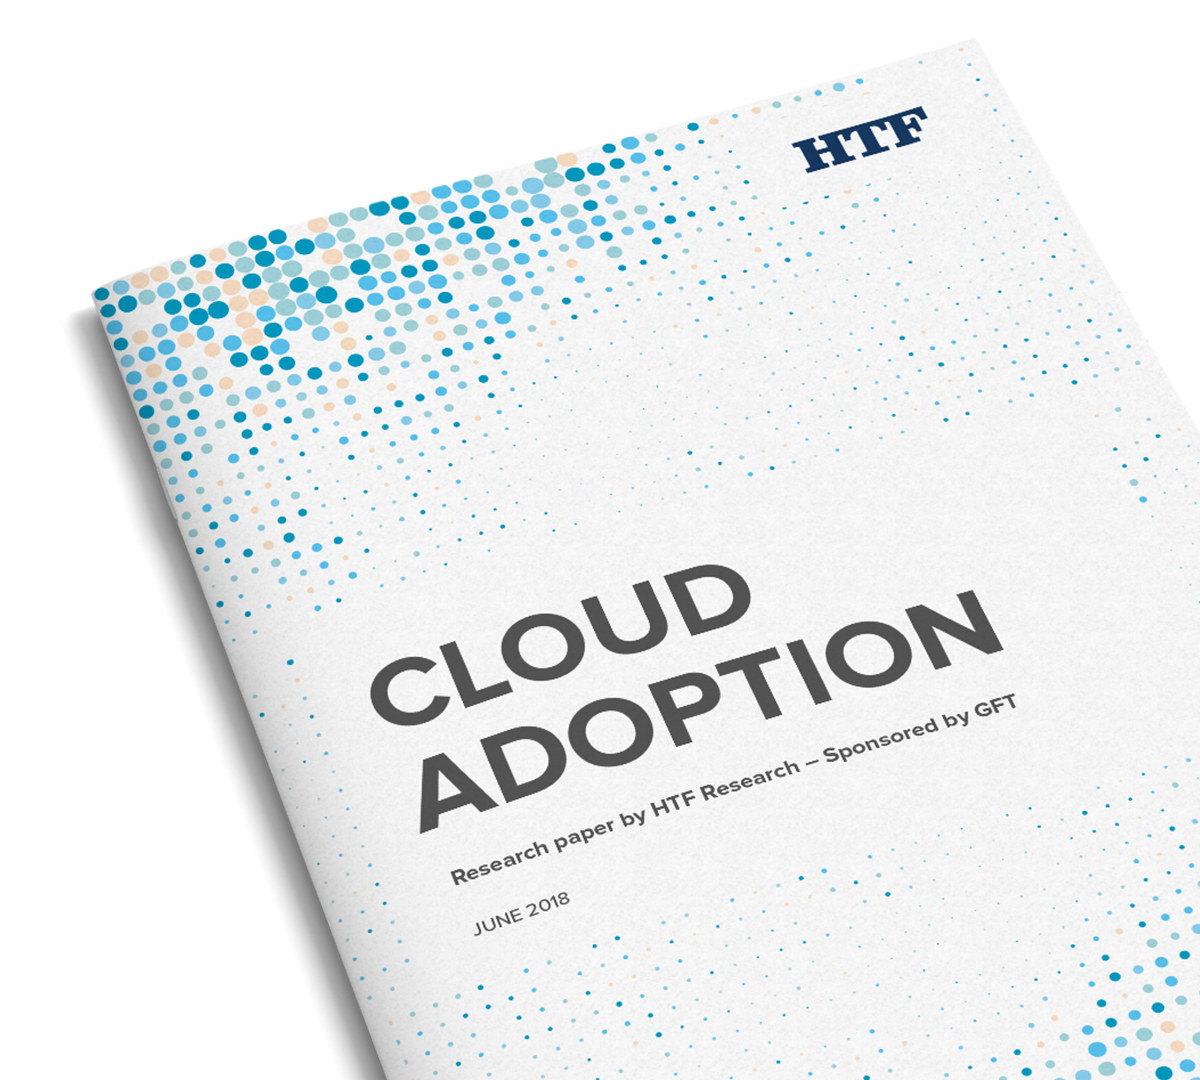 Thpught leadership: Cloud Adoption Research Paper